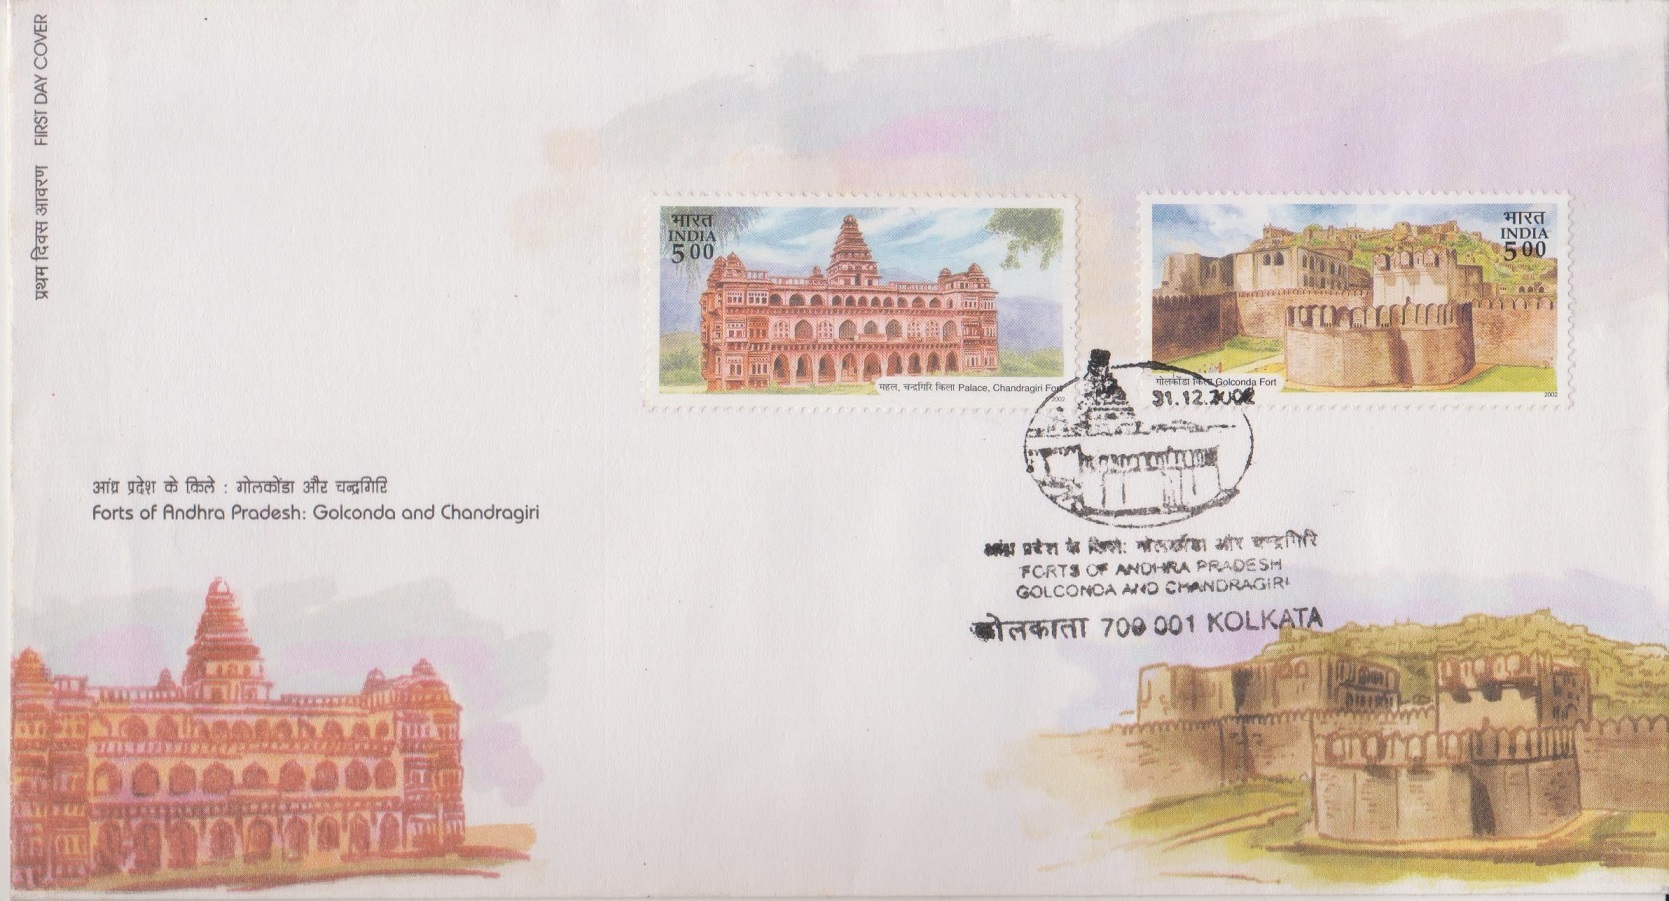 Golla konda Fort and Chandragiri Fort